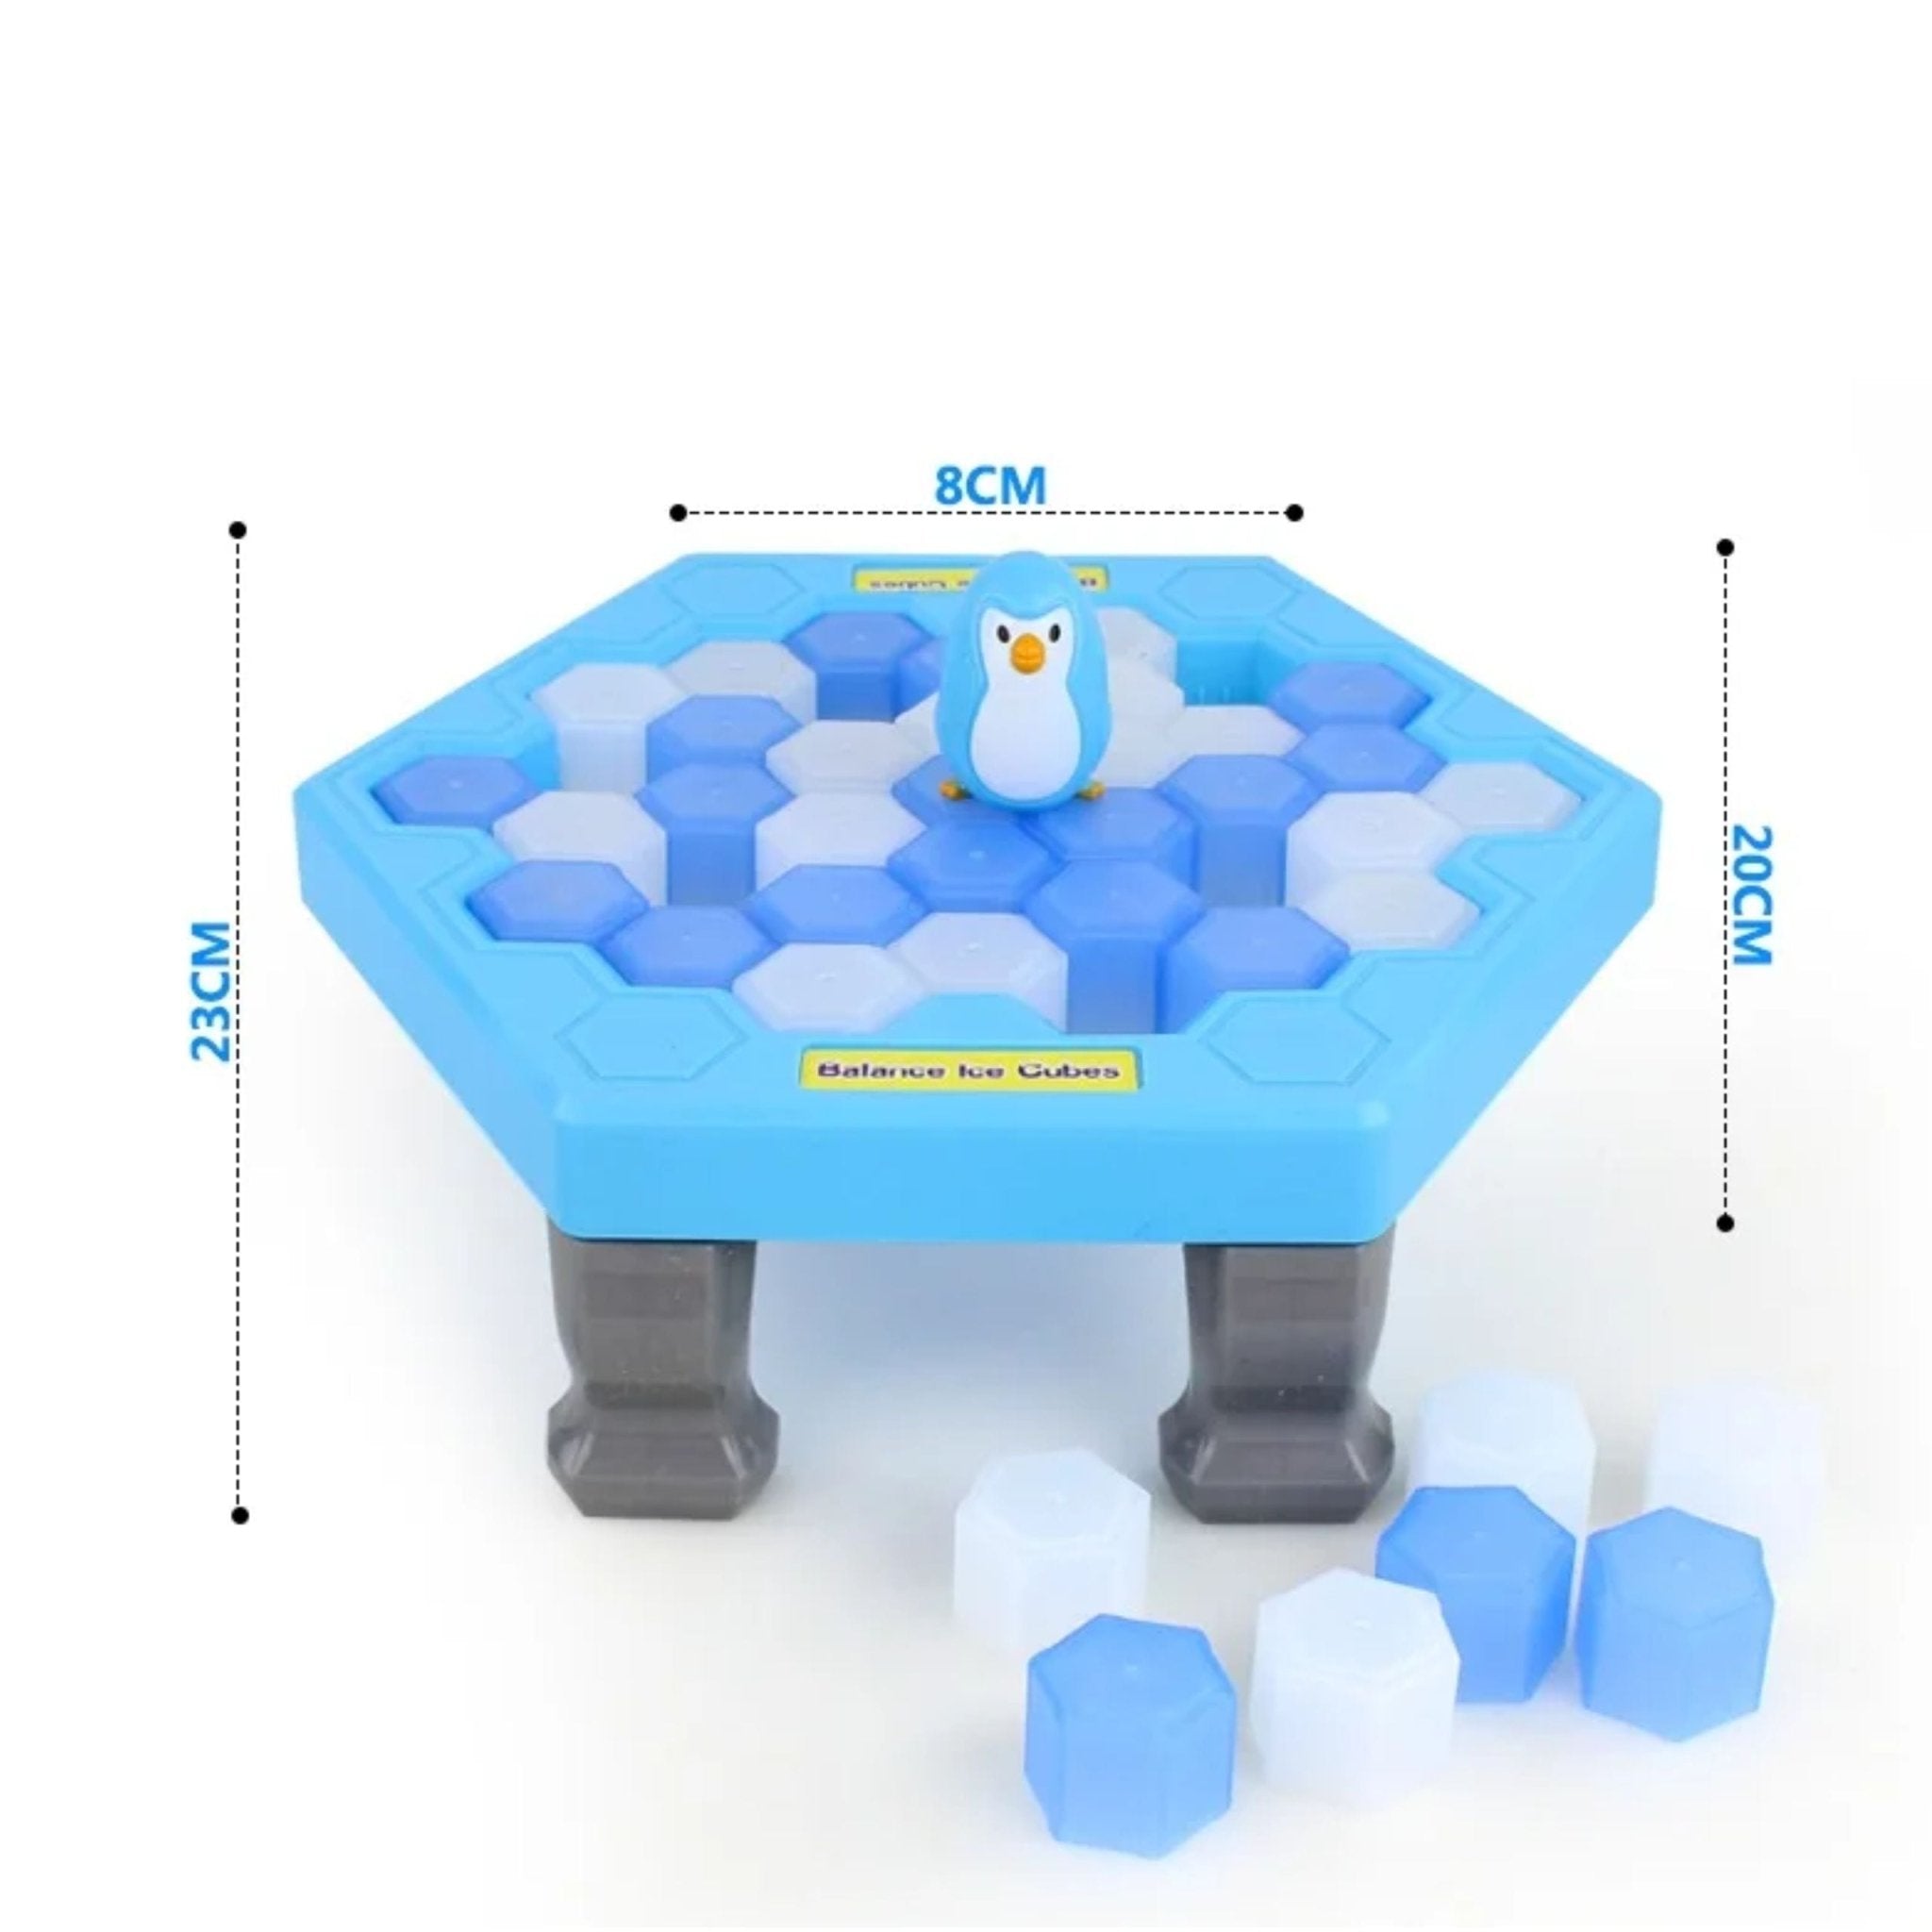 Penguin Trap Ice Breaking Game